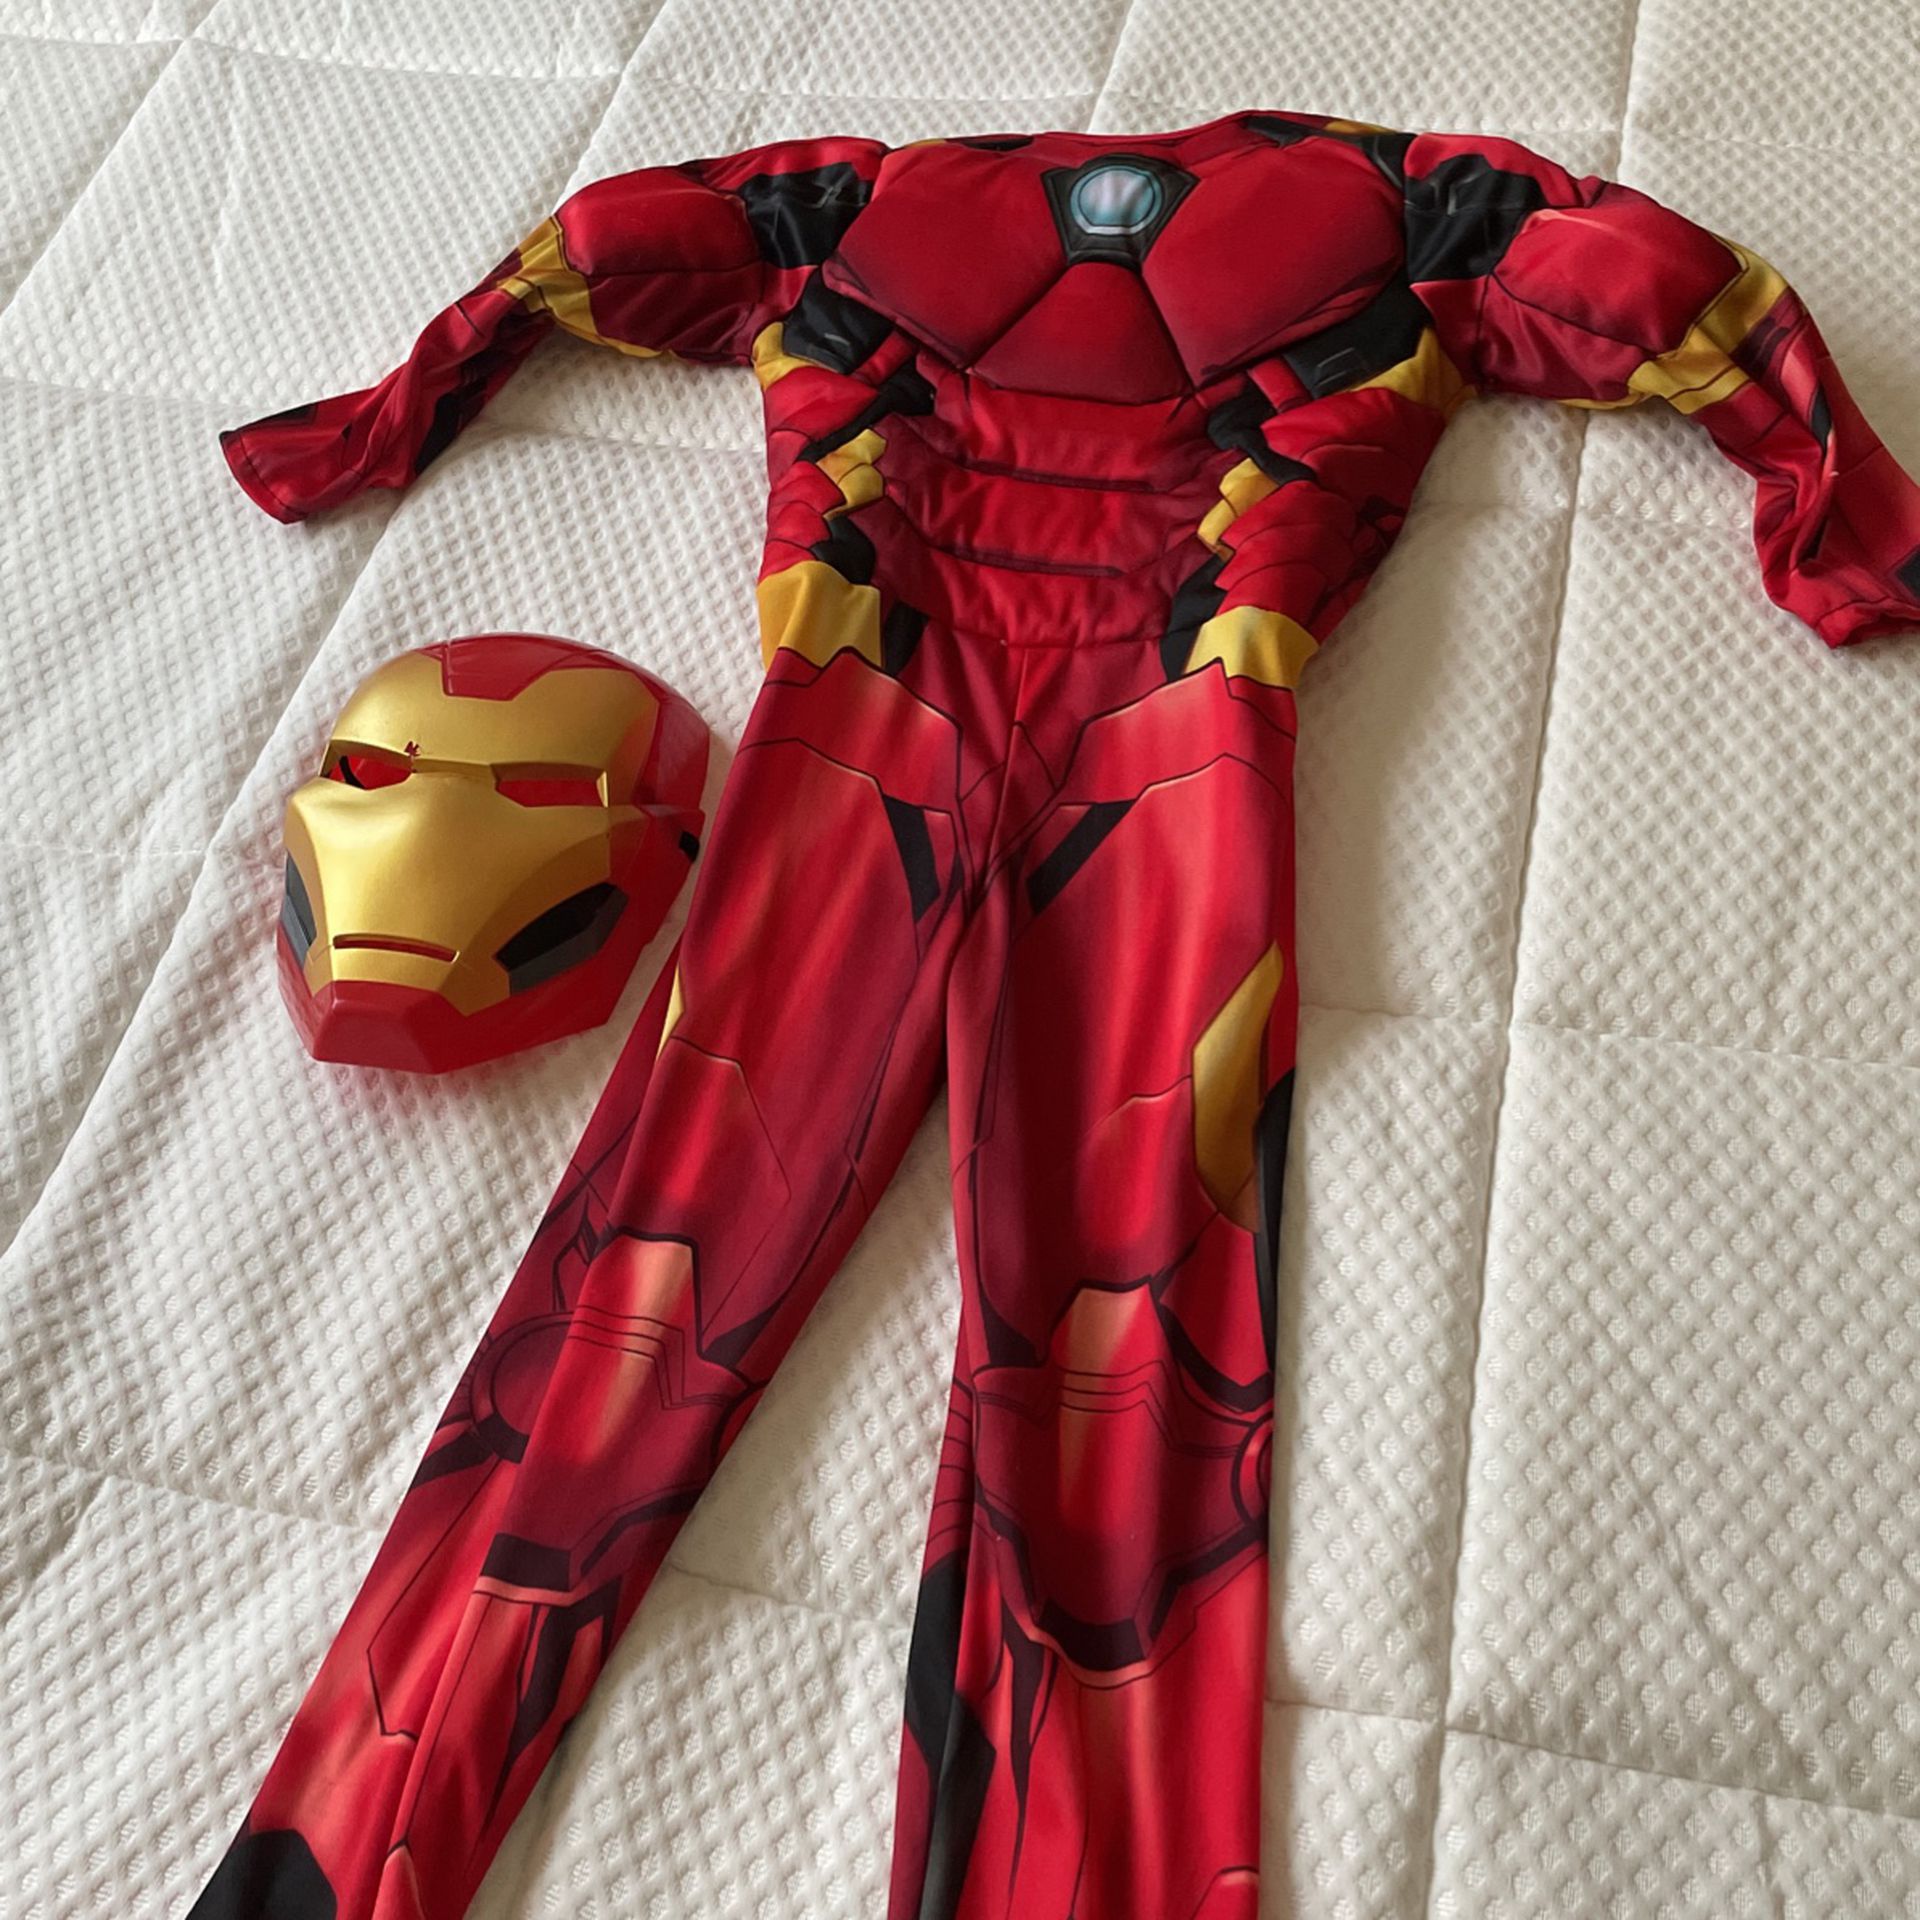 Avenger Iron Man Costume About Size 4-6